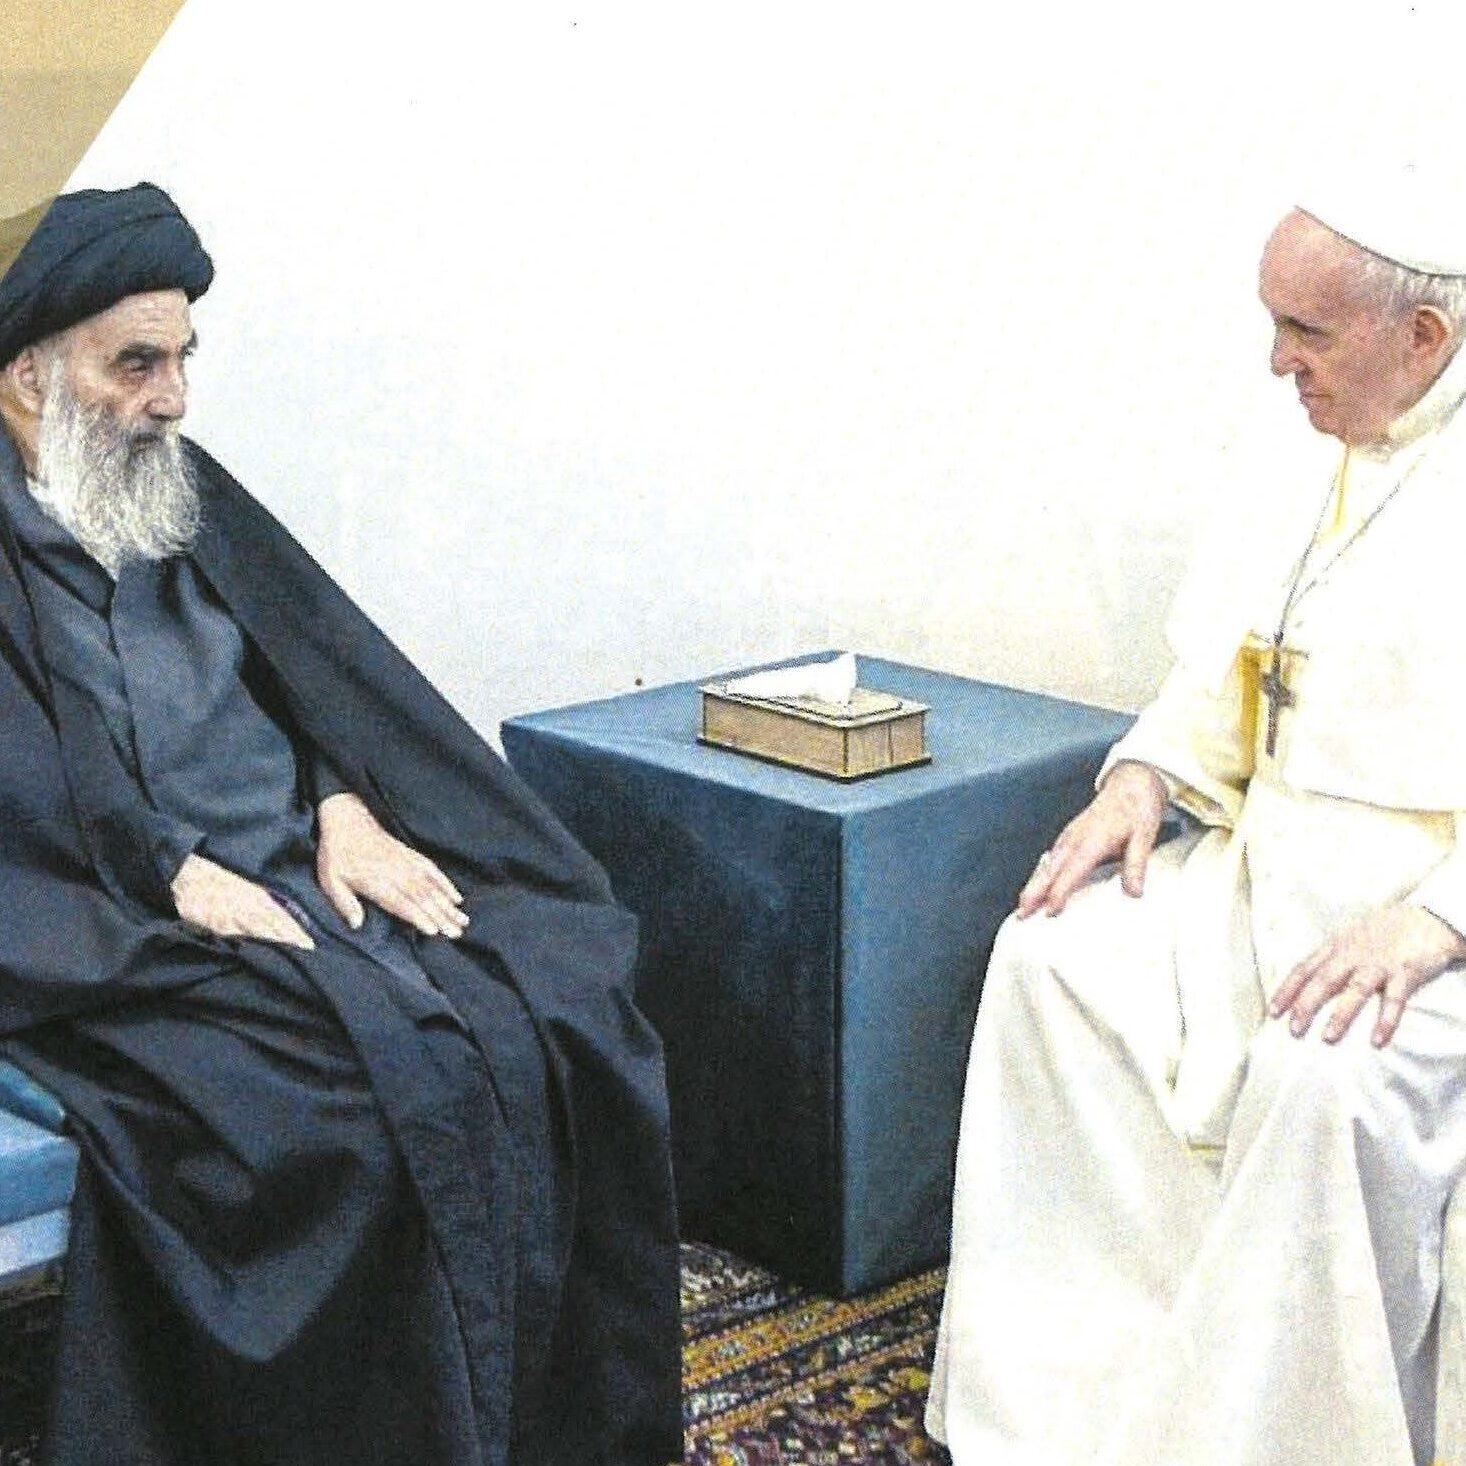 Papst Franziskus im Irak